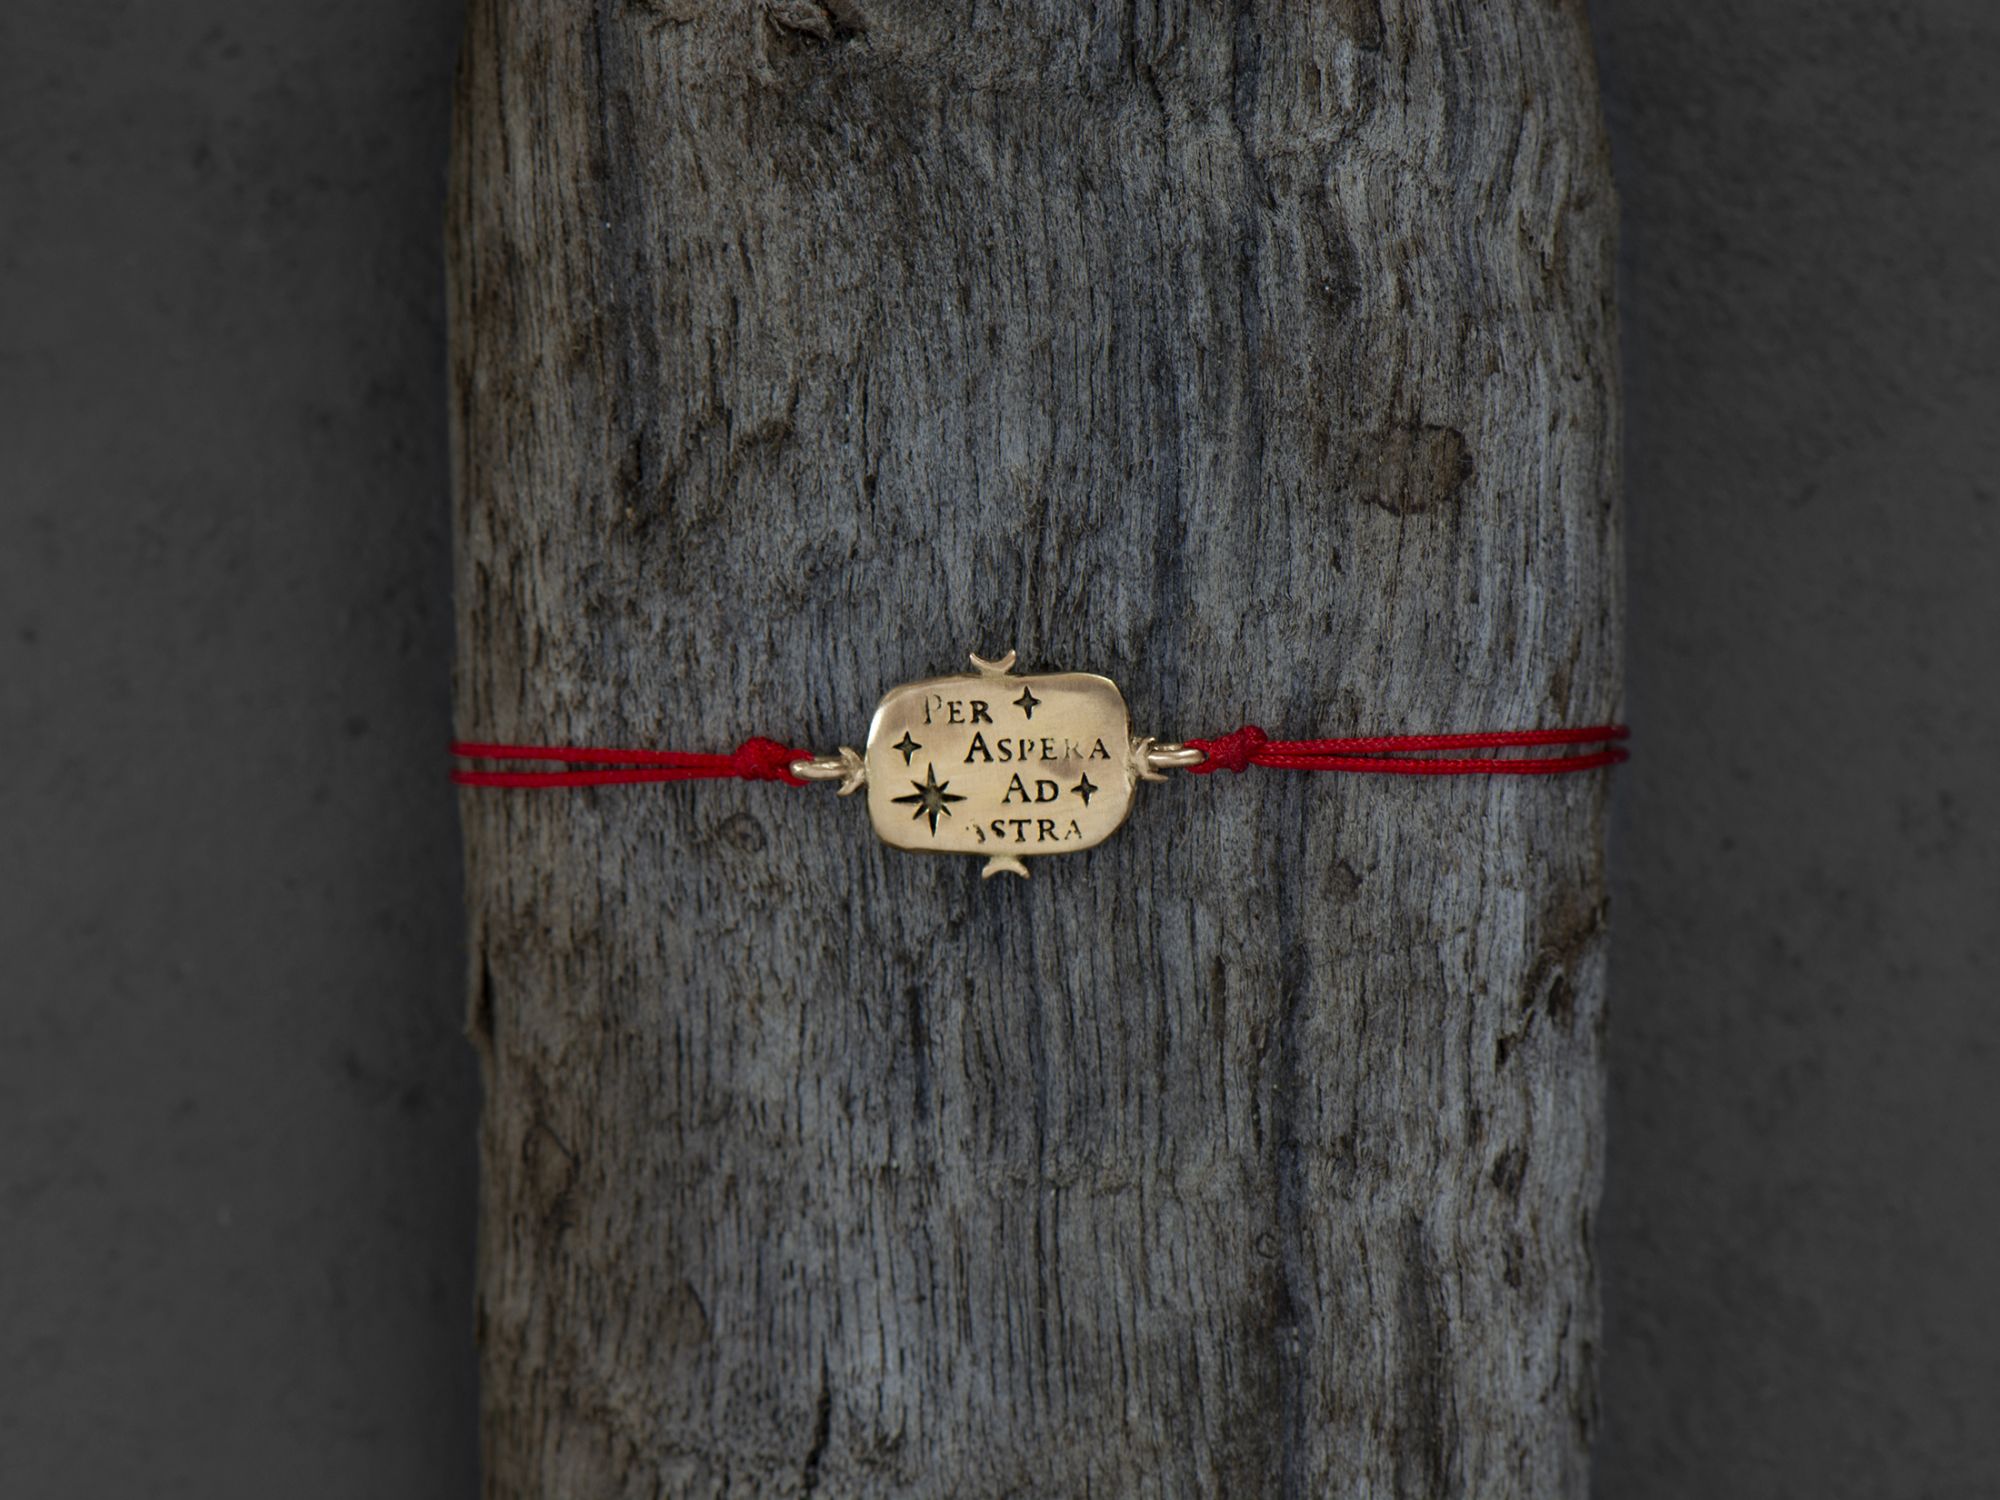 Ad Astra vermeil bracelet by Emmanuelle Zysman